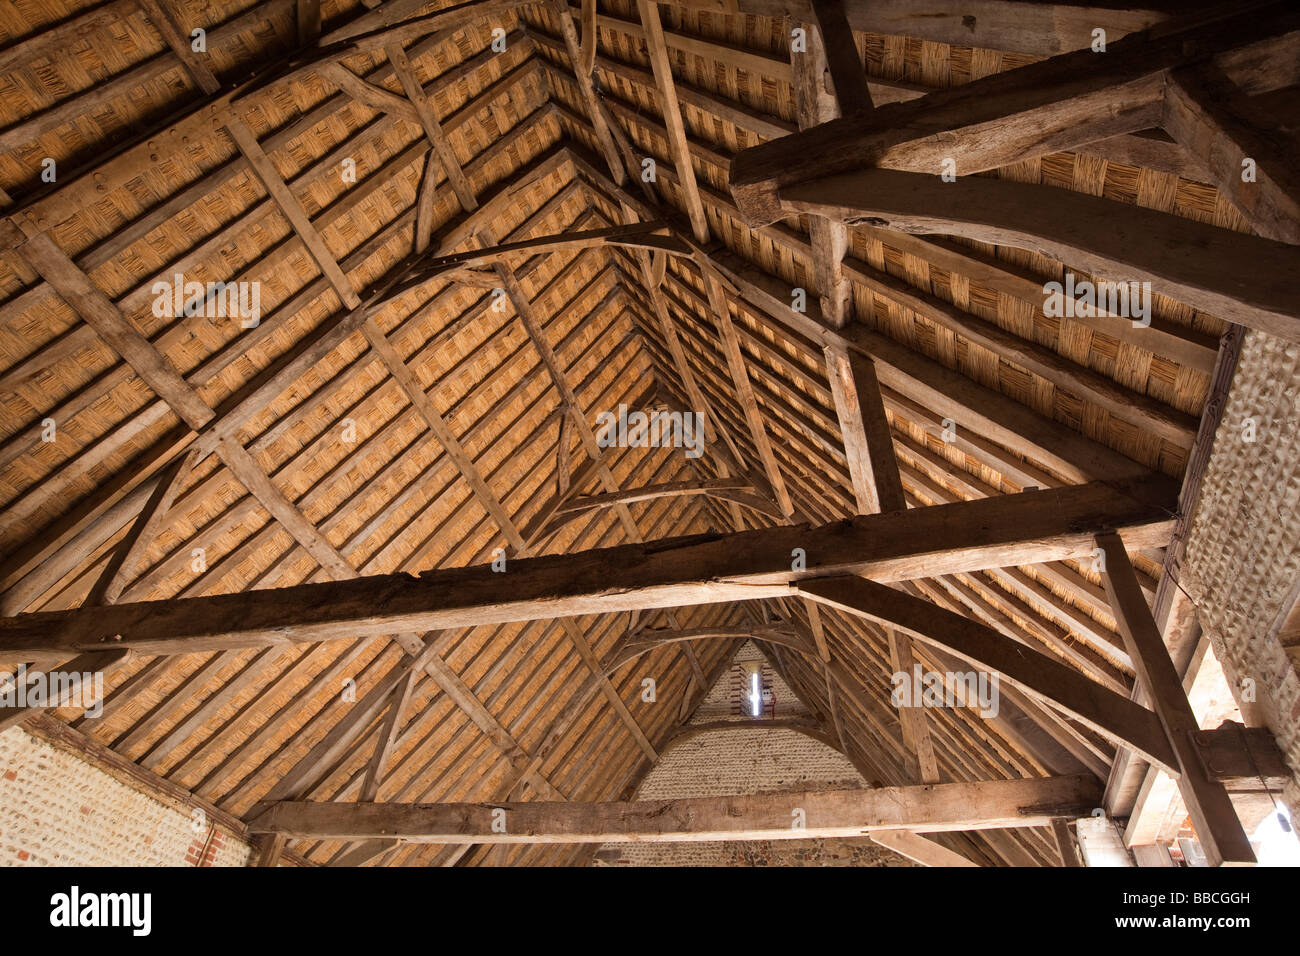 UK England Norfolk Waxham historic medieval stone barn interior roof timbers Stock Photo